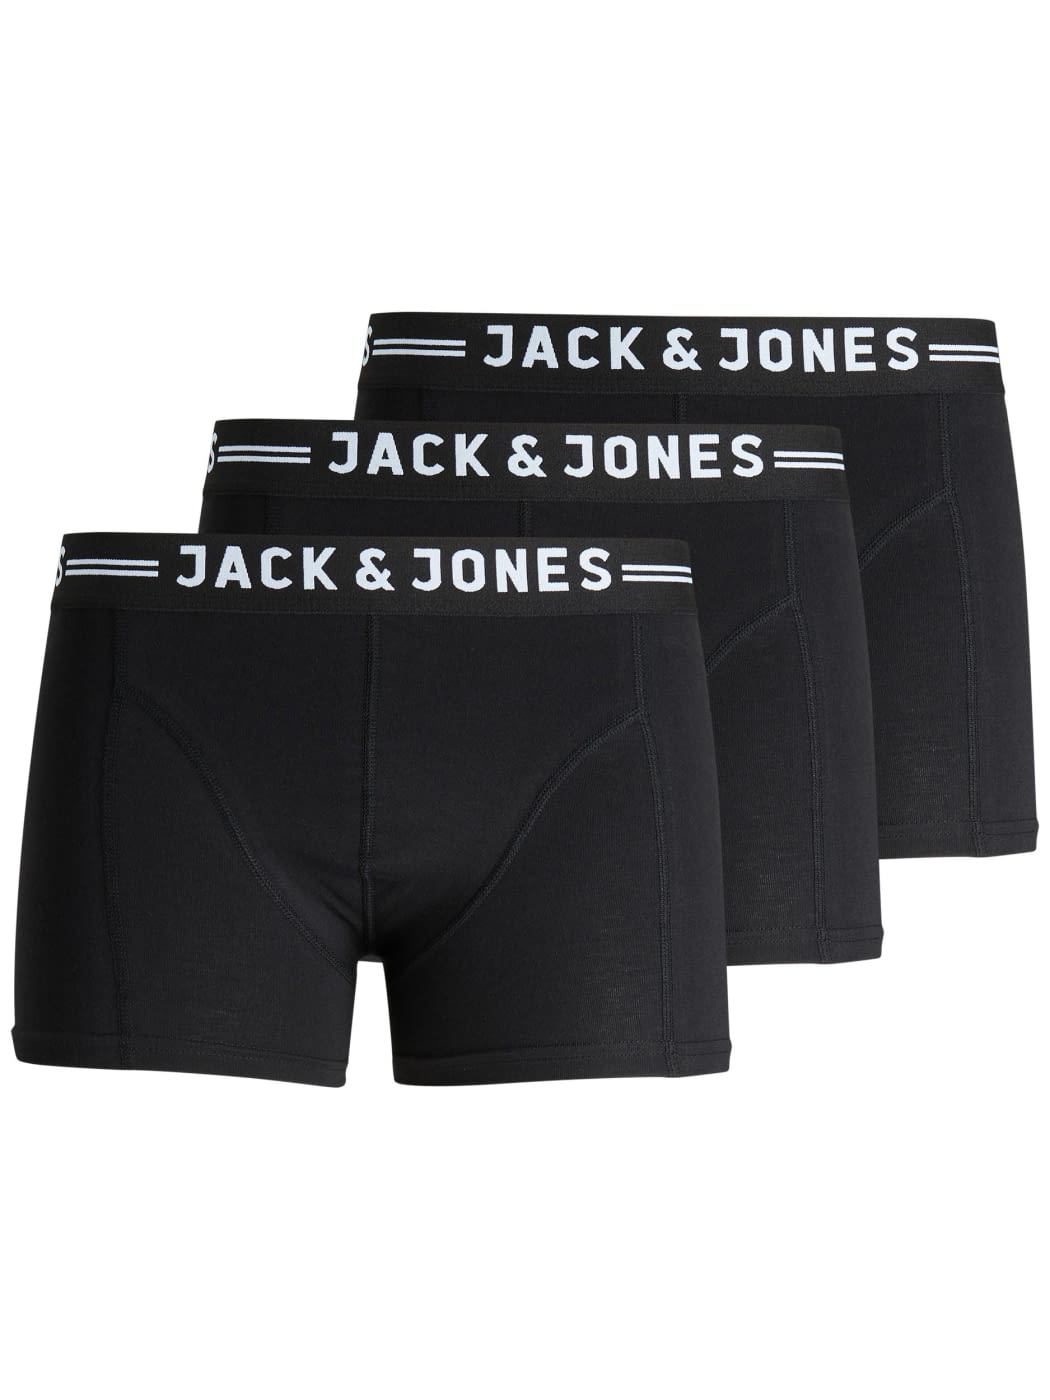 JACK & JONES pack 3 boxers